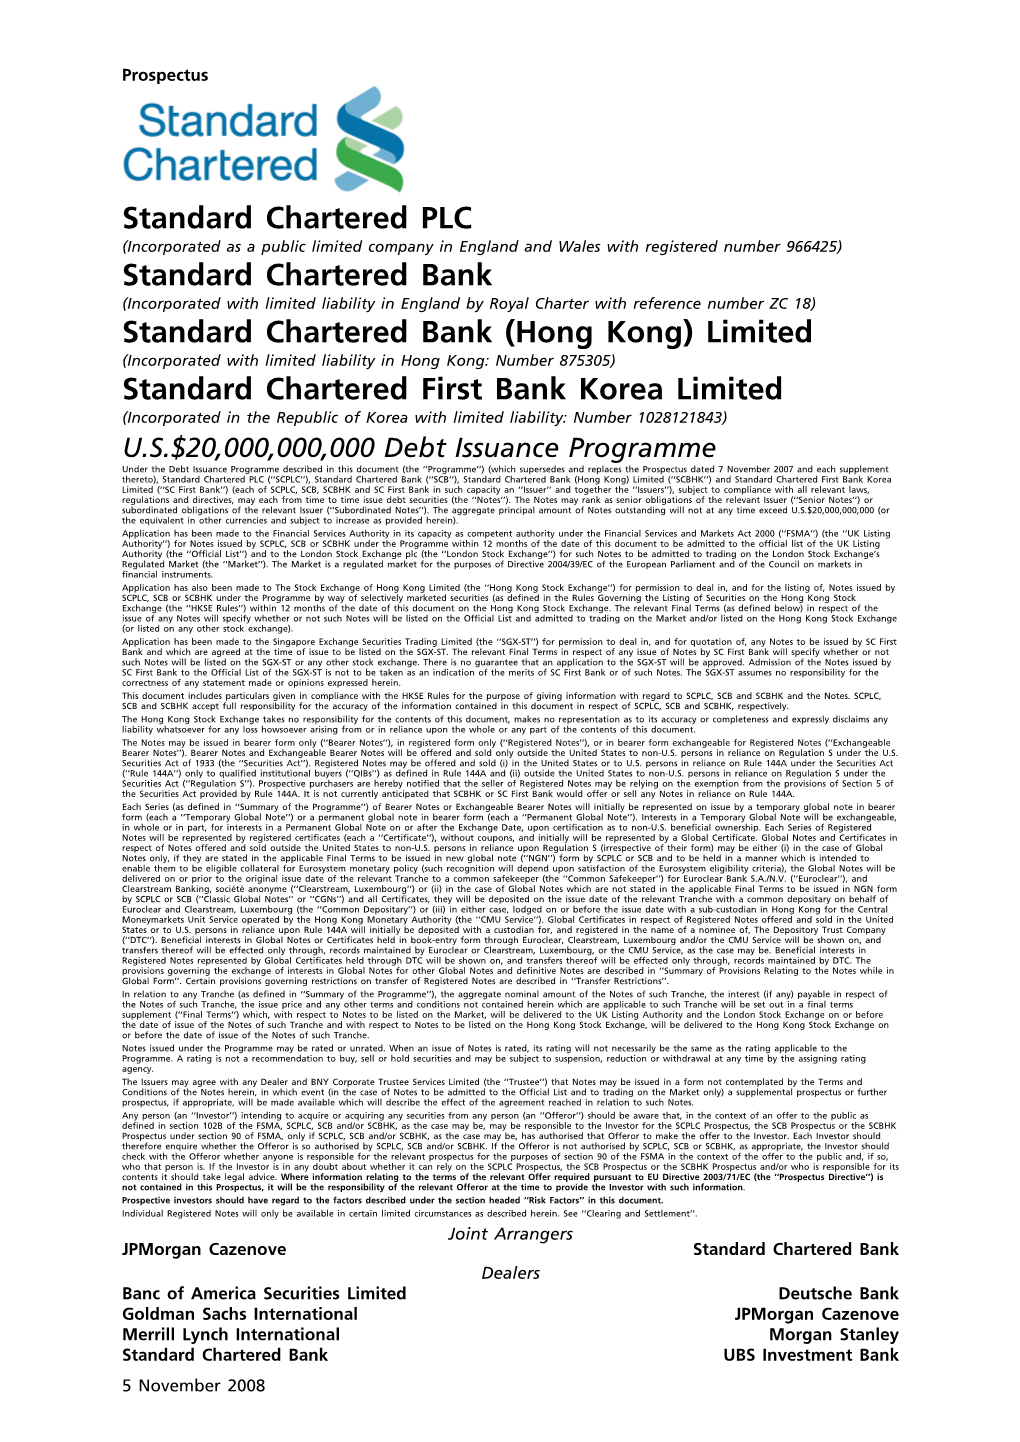 Standard Chartered PLC Standard Chartered Bank